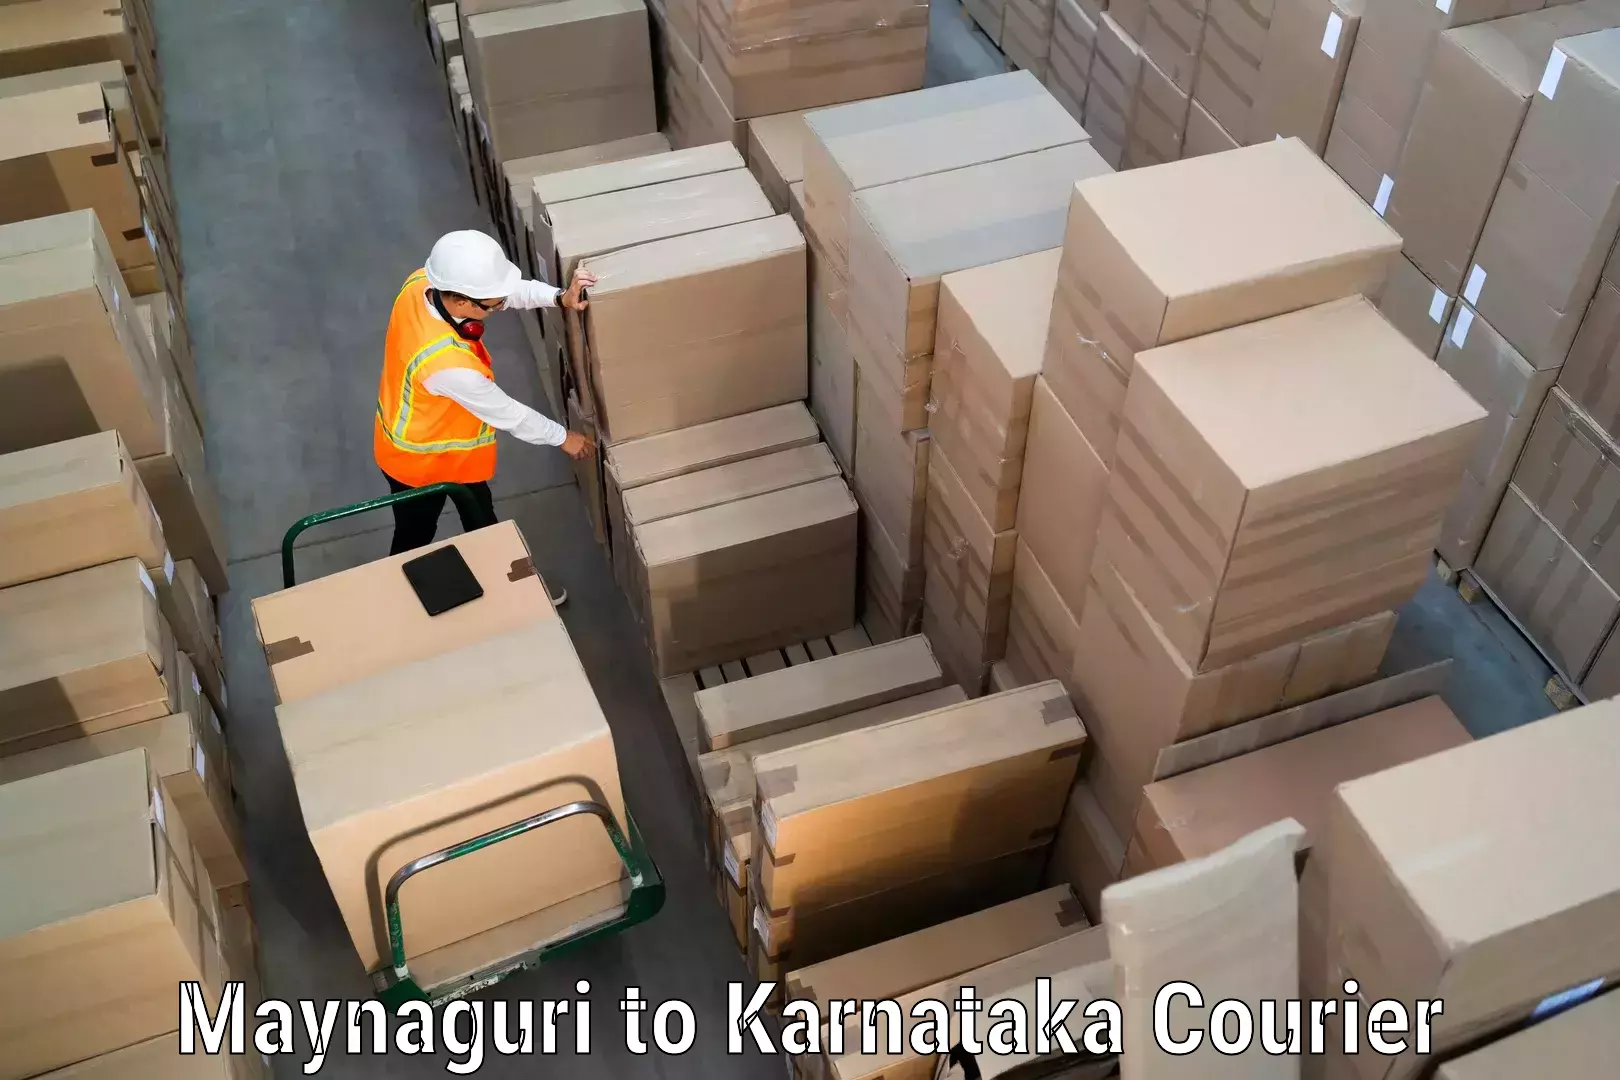 Secure package delivery in Maynaguri to Karnataka